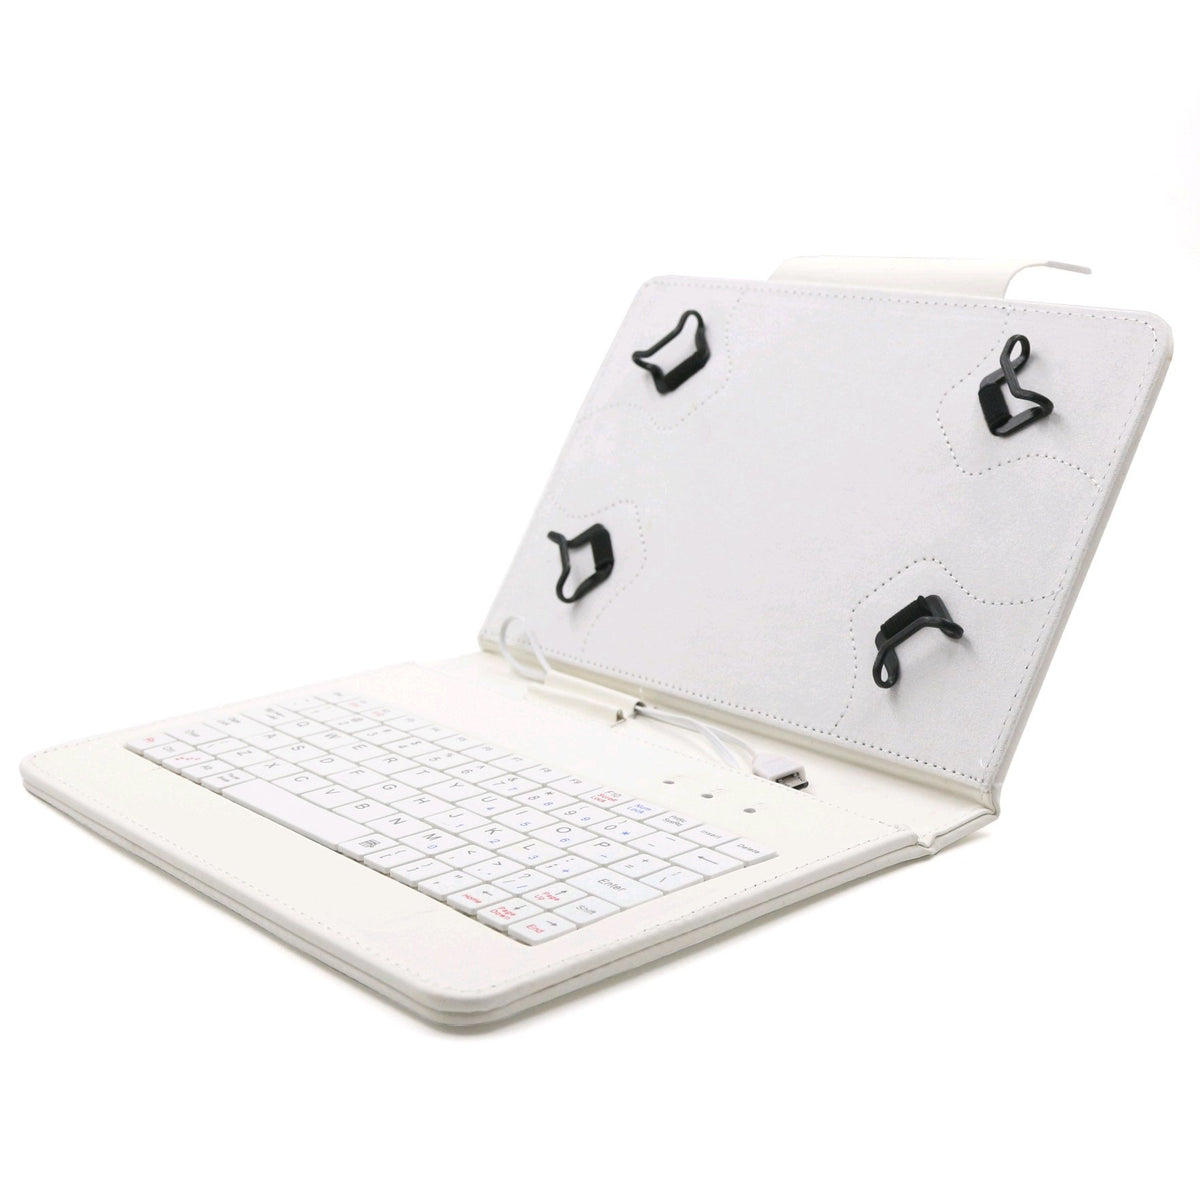 C-TECH PROTECT puzdro s klávesnicou 8 "NUTKC-02, biele